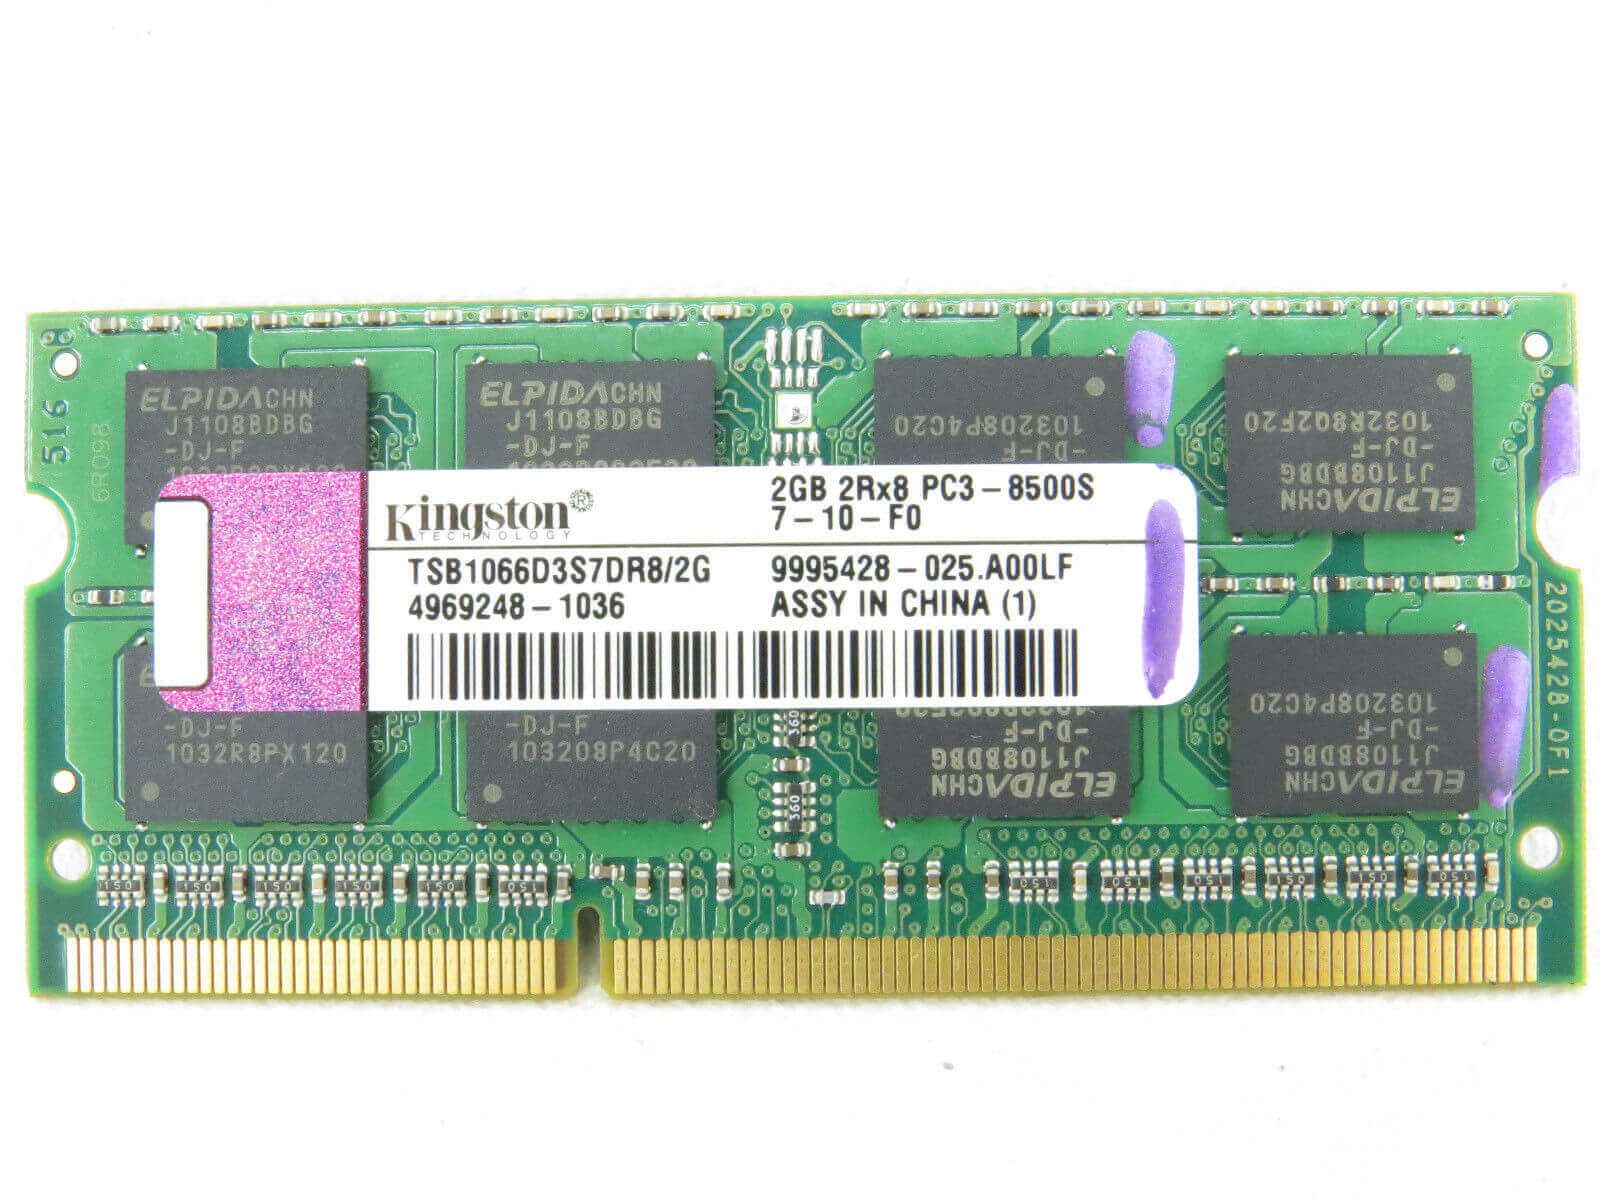 Оперативная память купить 2gb. Память ddr3 SODIMM 2gb. So DIMM pc3 2 GB 1066mhz. 2gb ddr3 Samsung so-DIMM. Ddr3 so-DIMM 2gb Kingston pc3-8500s 1066mhz.